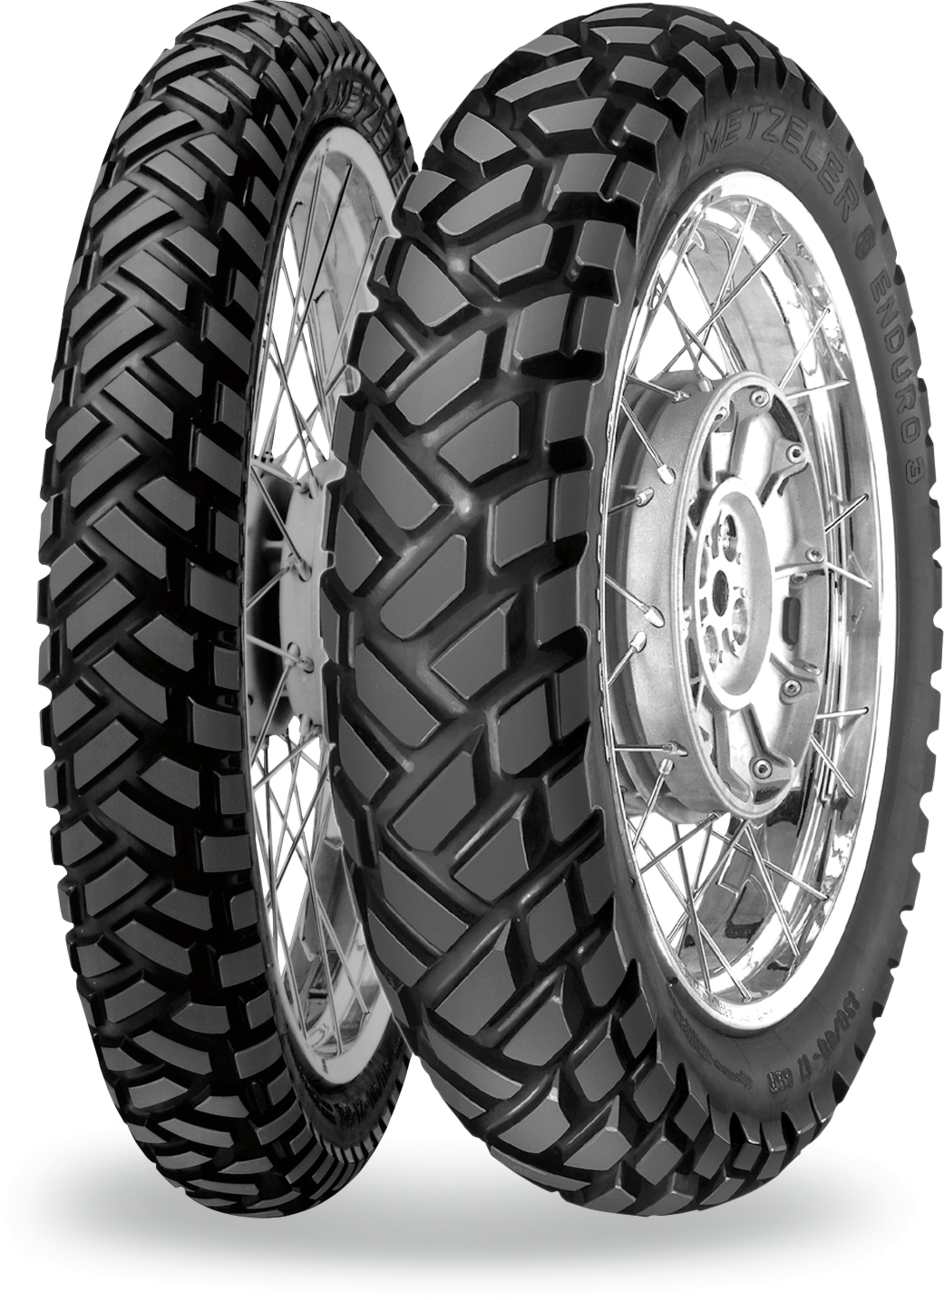 METZELER Tire - Enduro 3 Sahara - Rear - 140/80-17 - 69H 3982900